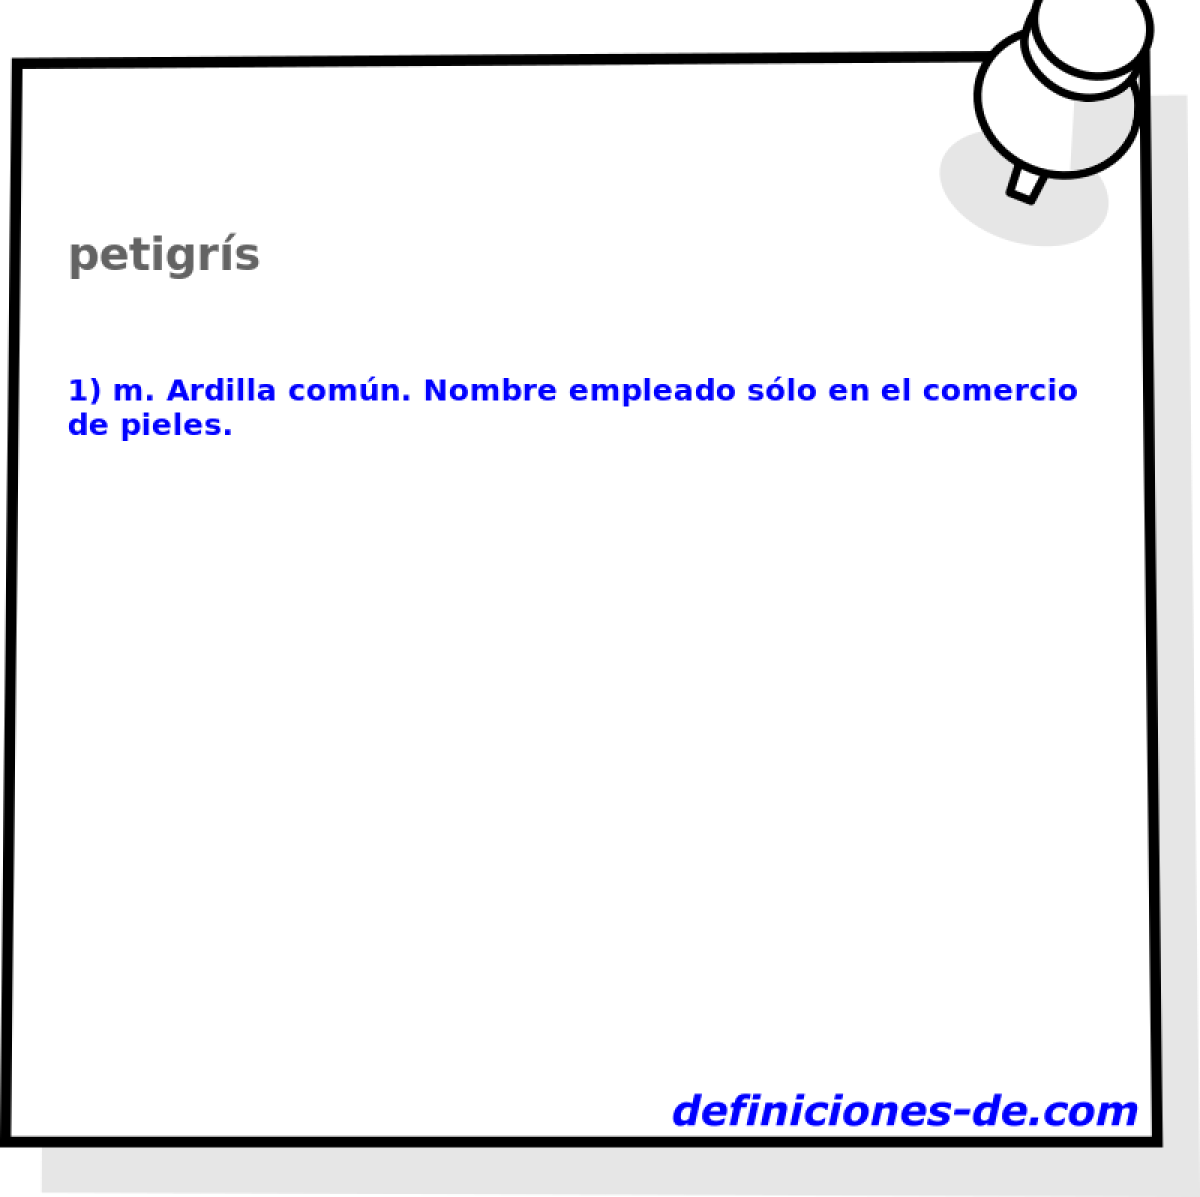 petigrs 